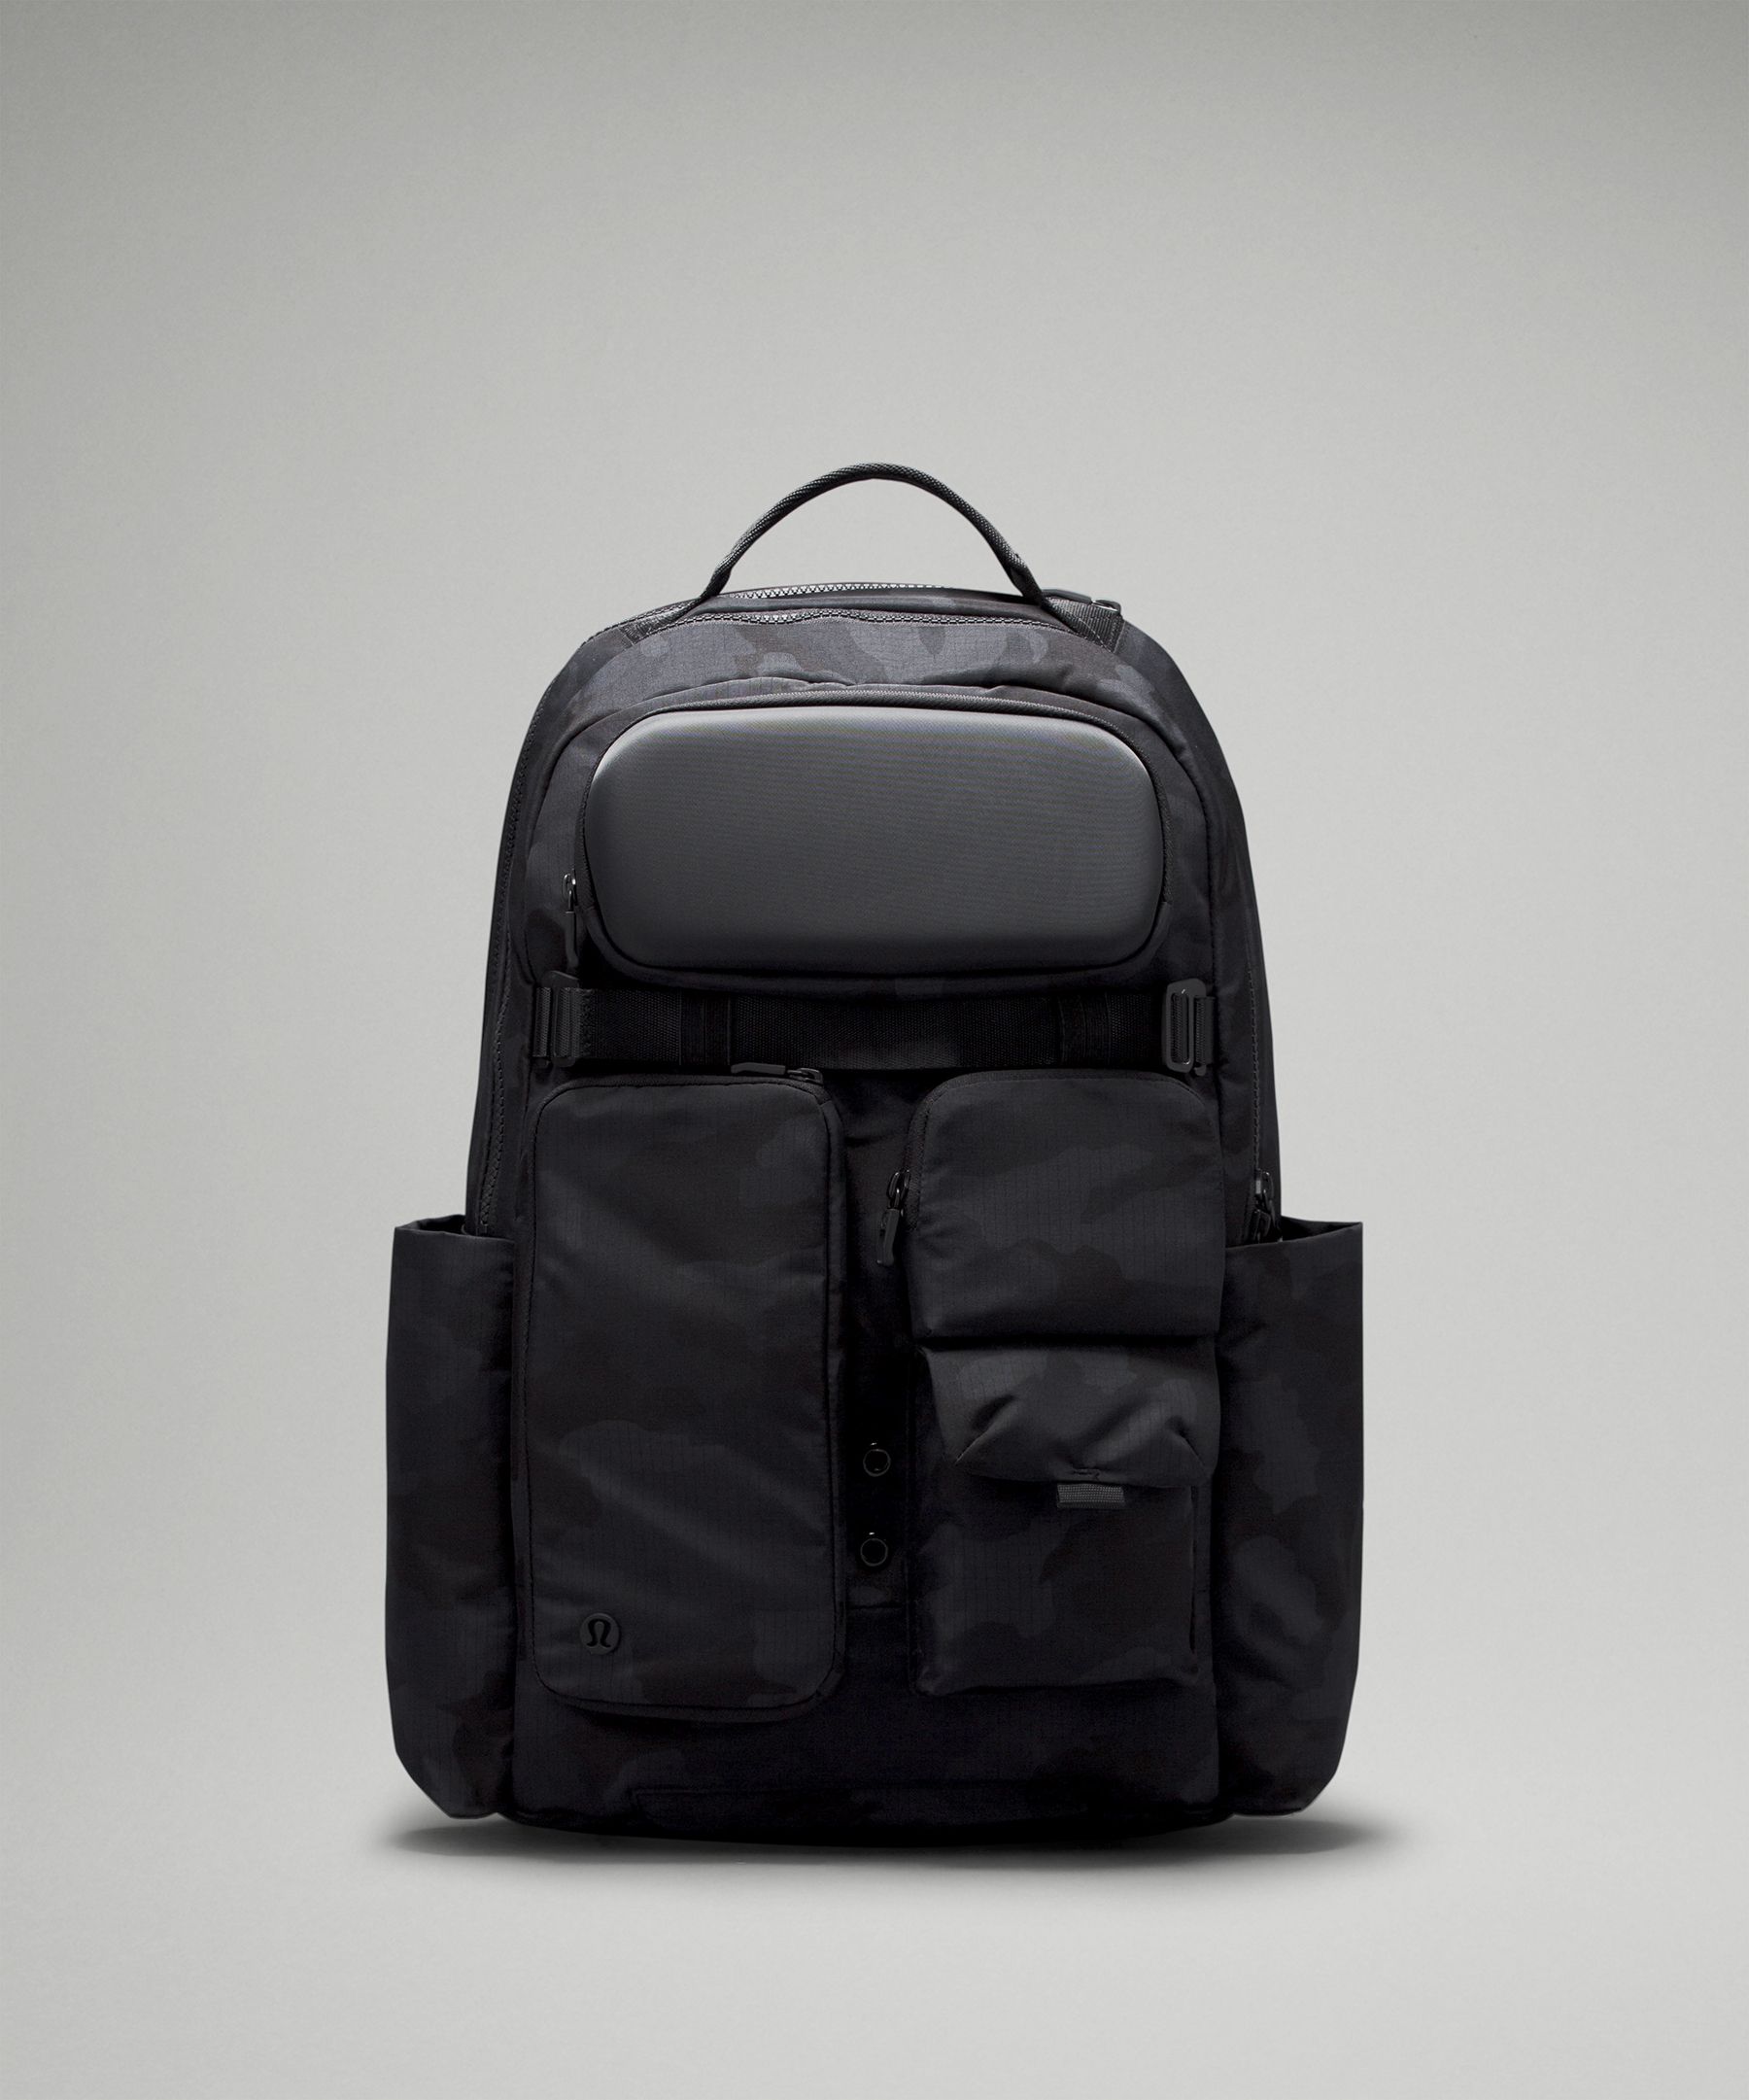 Supreme | Backpack